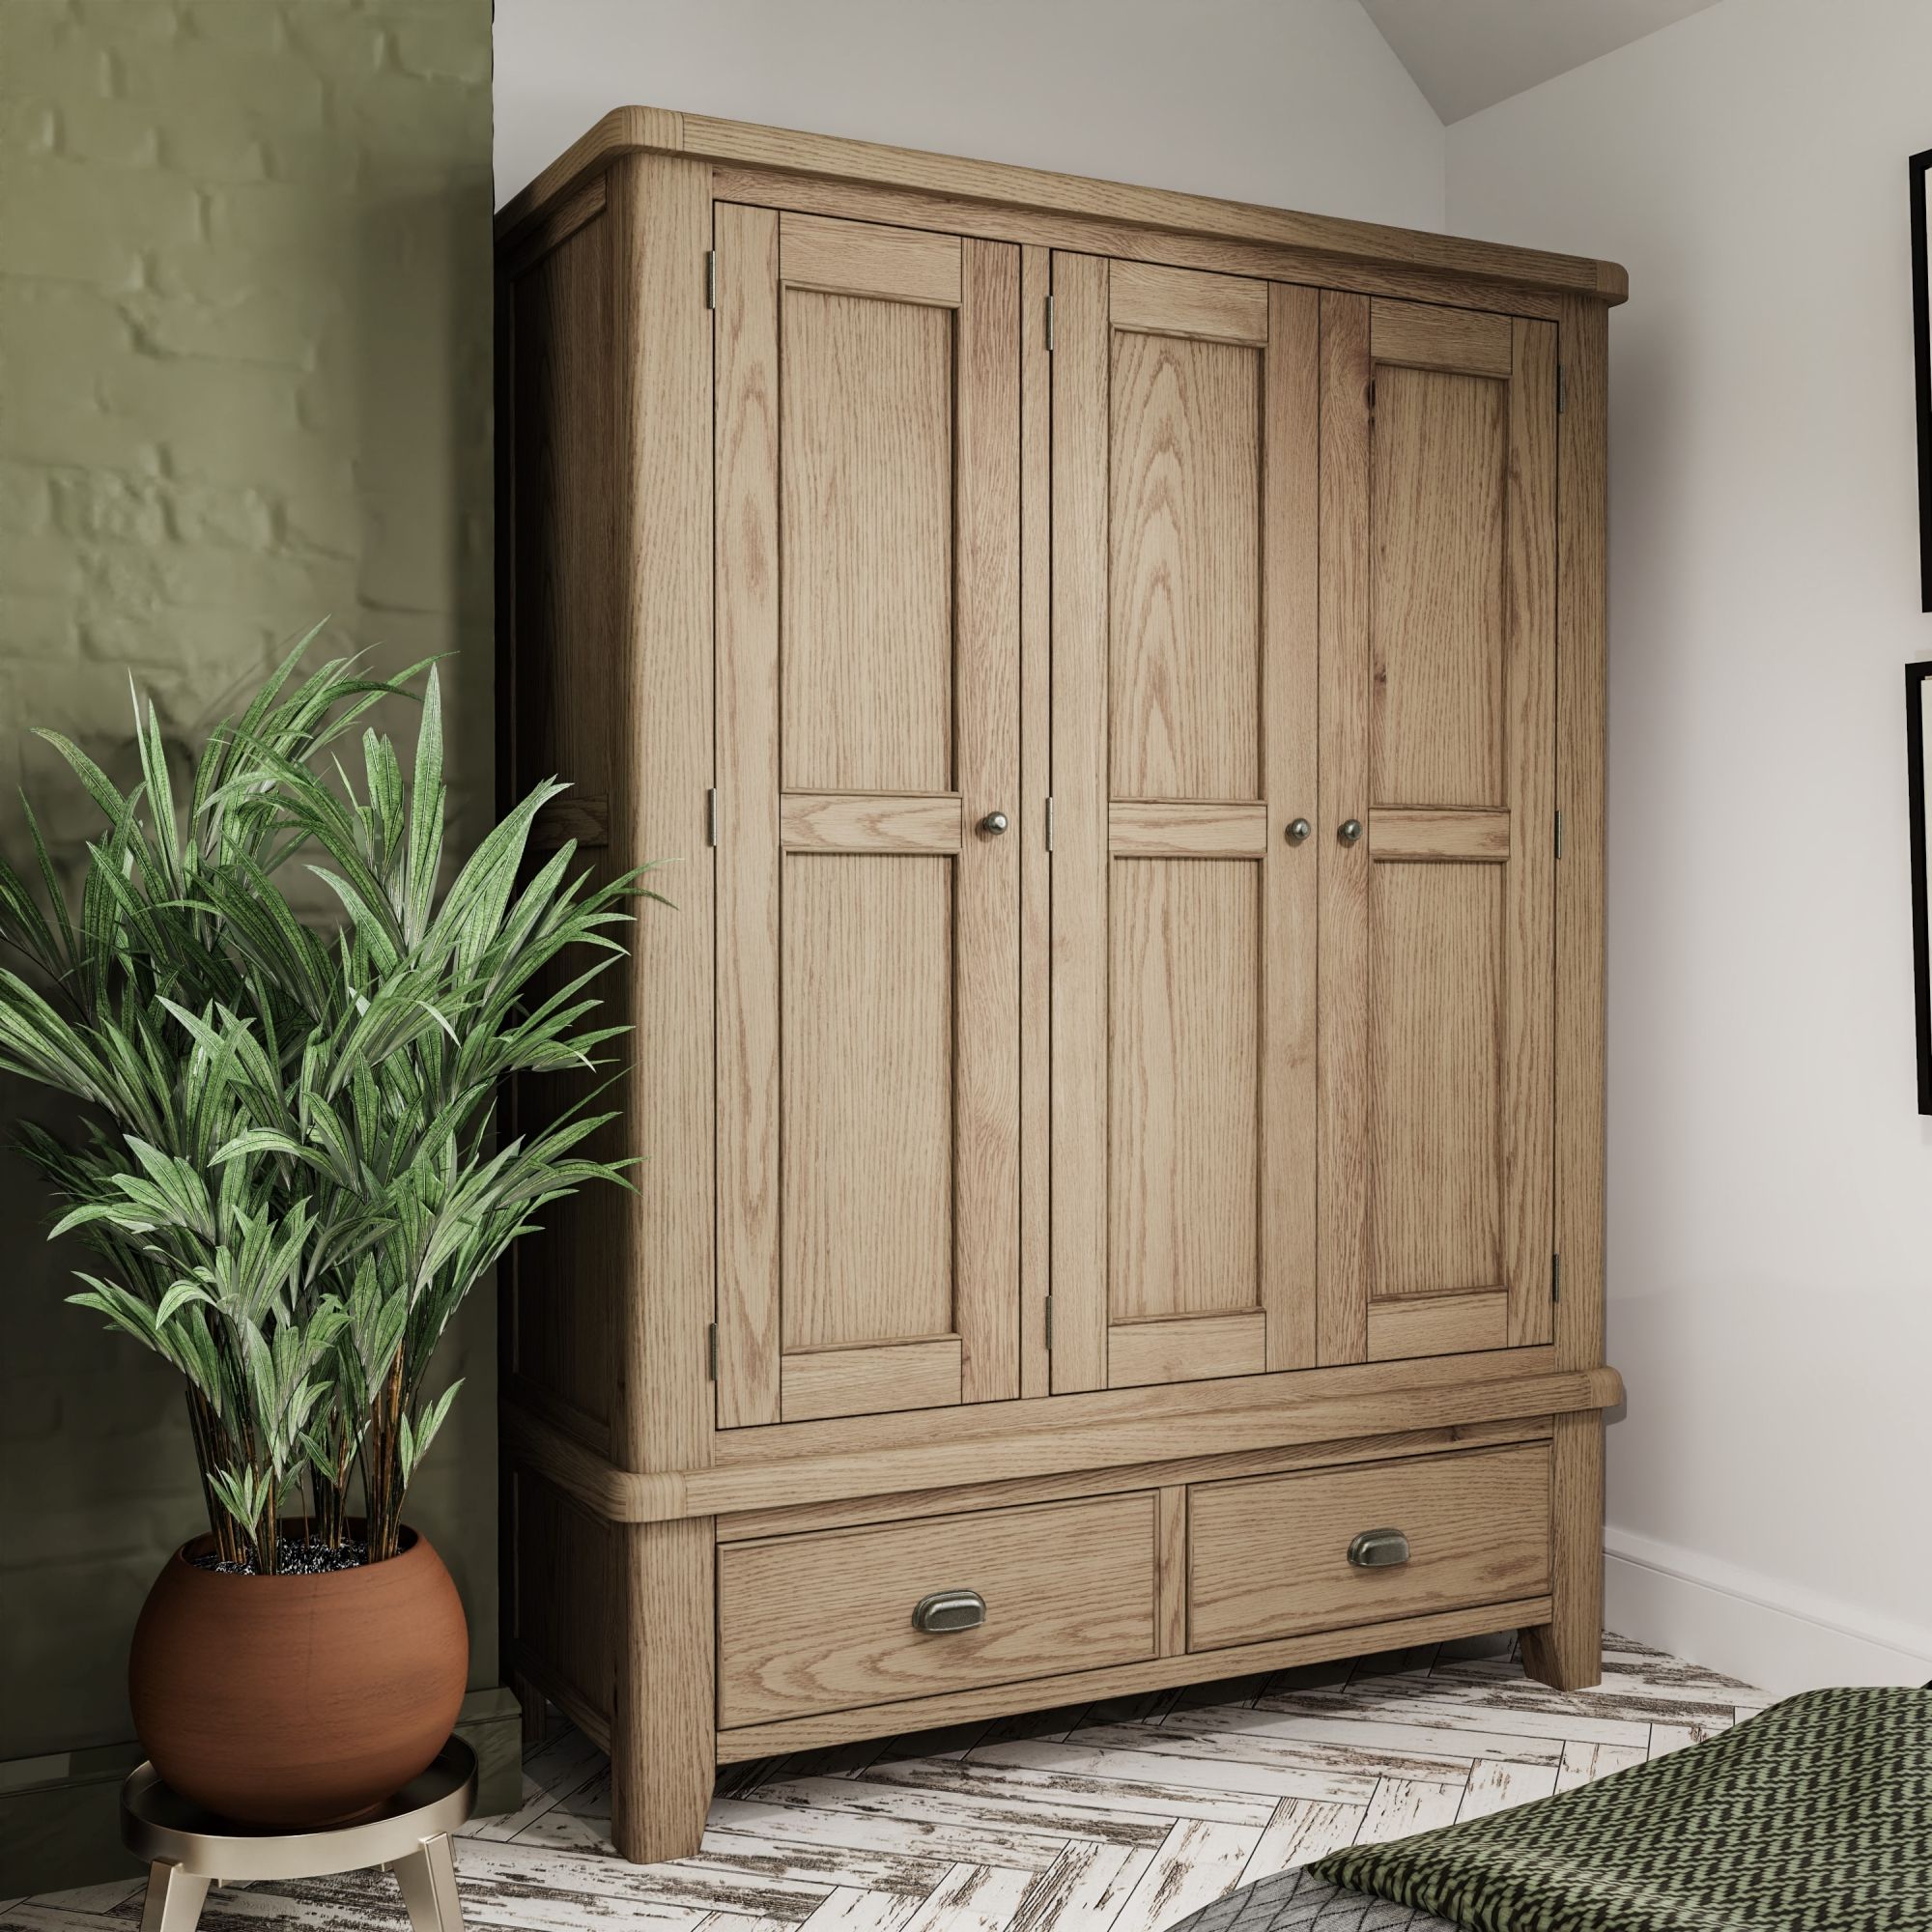 Smoked Oak 3 Door Wardrobe With 2 Drawers – Furniture World Intended For Oak Wardrobes With Drawers And Shelves (Gallery 10 of 20)